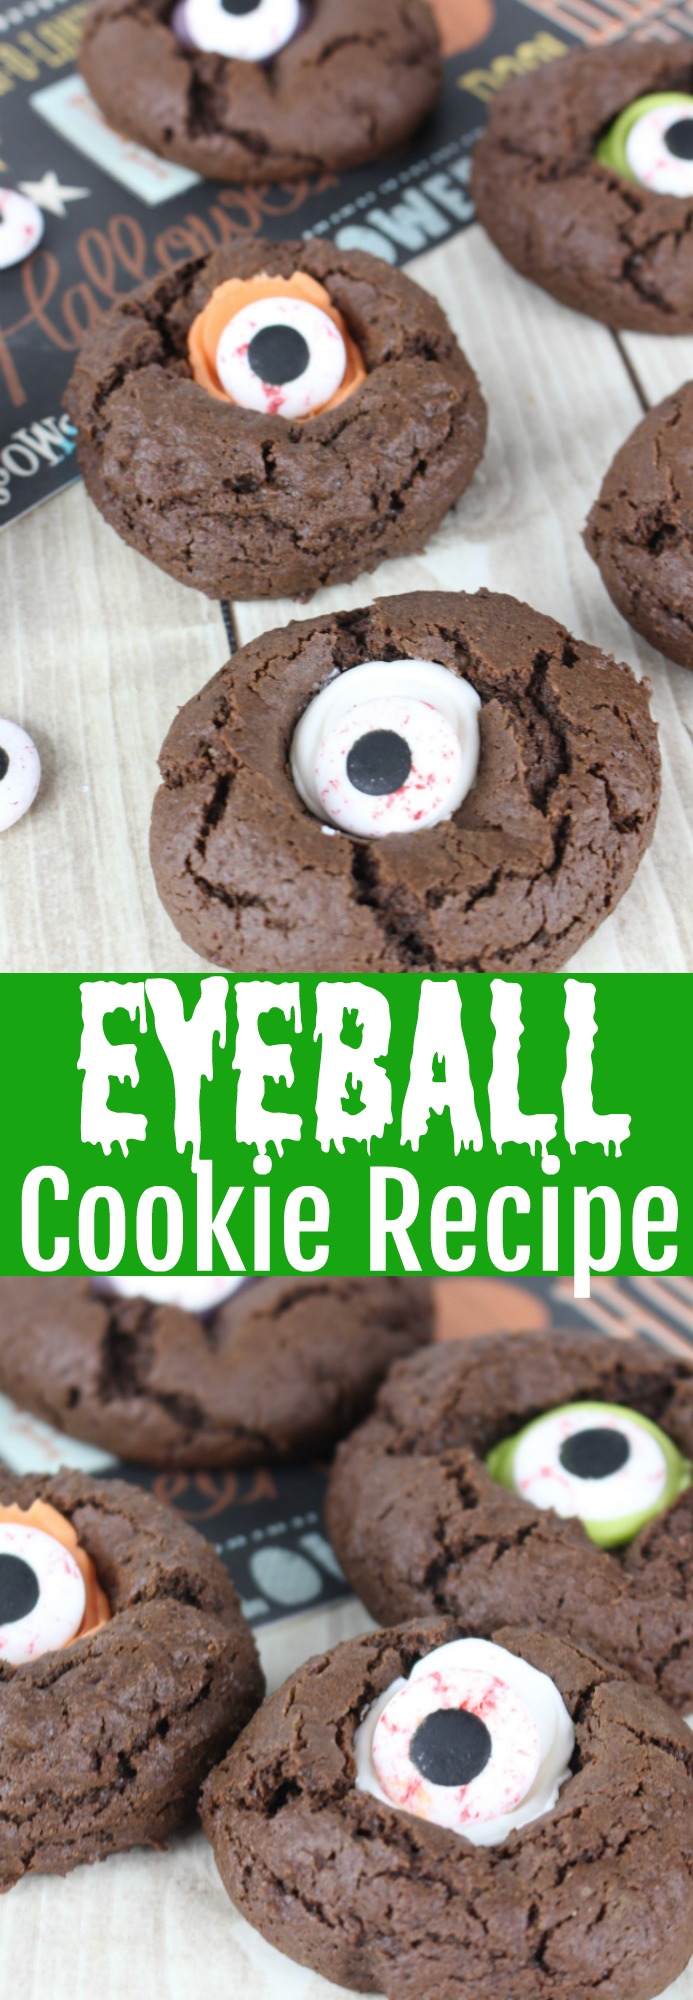 Spooky Halloween Cookies - Eyeball Thumbprint Cookies